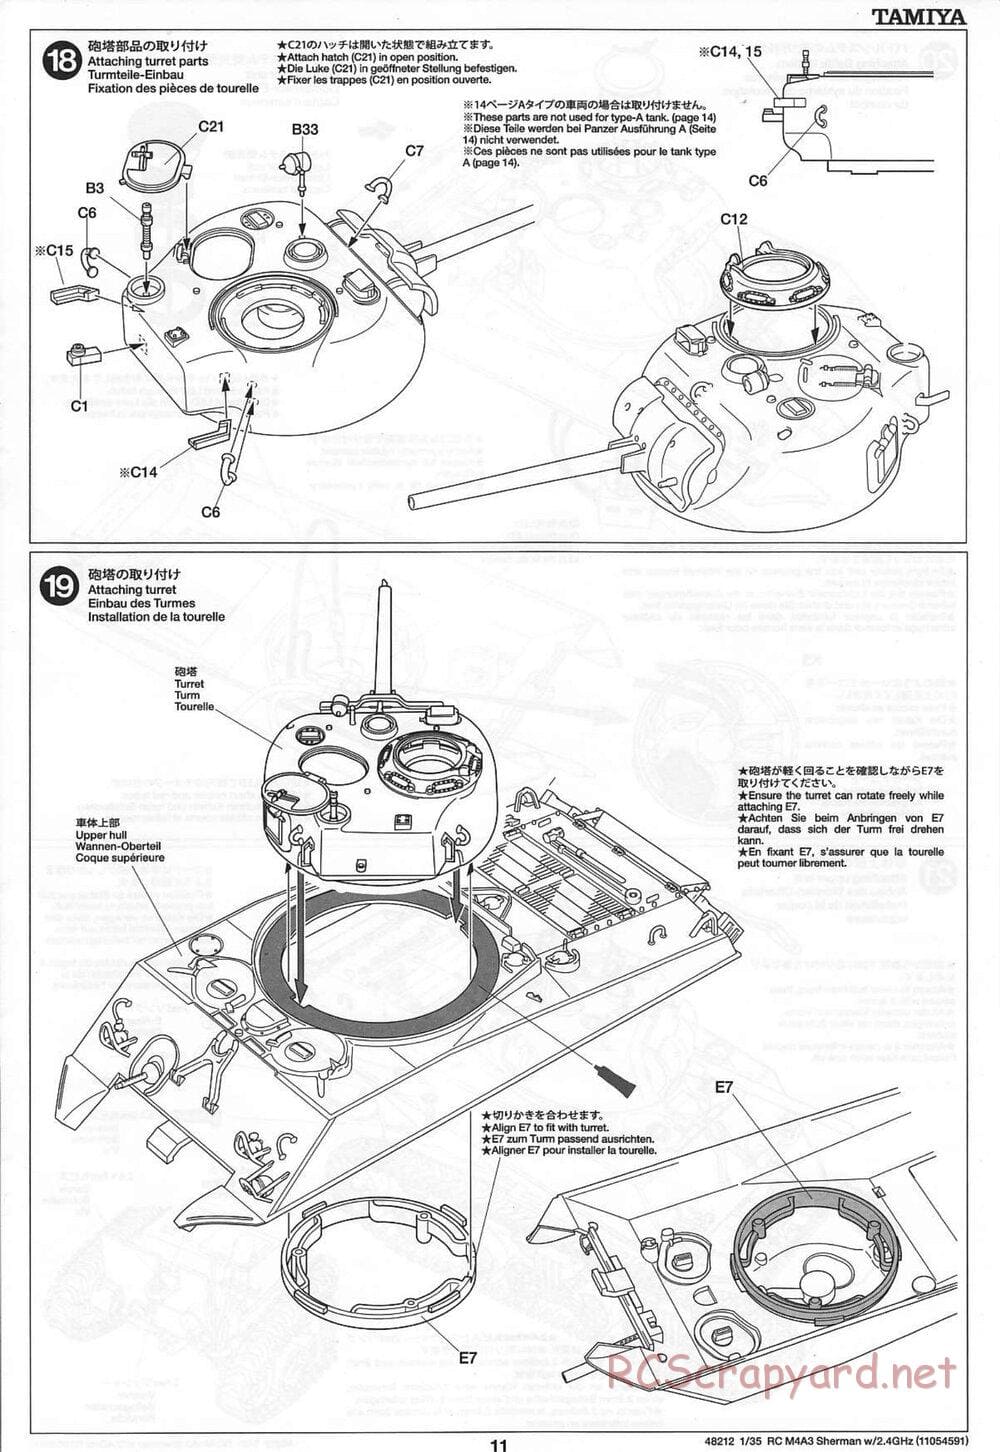 Tamiya - US Medium Tank M4A3 Sherman - 1/35 Scale Chassis - Manual - Page 11